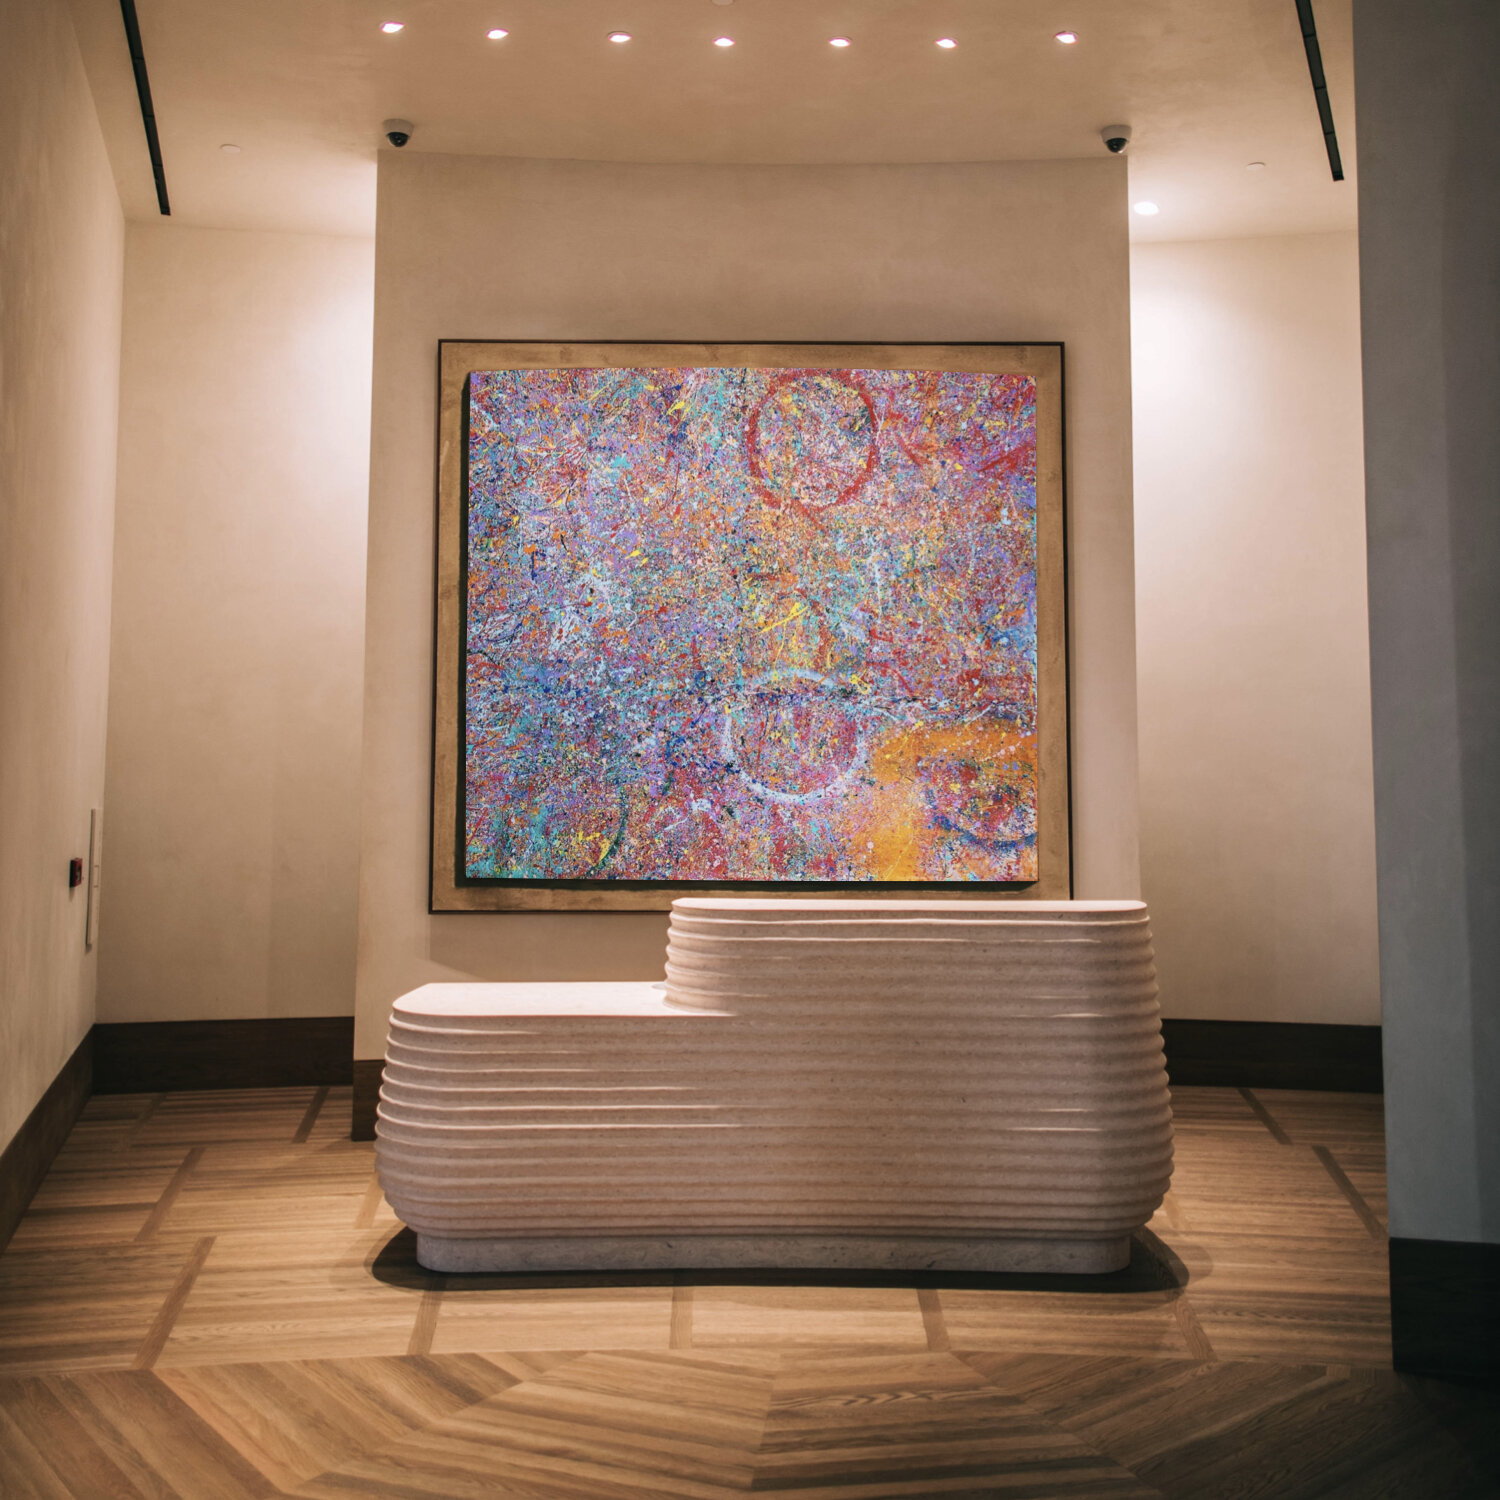 dec-2020-hotel-lobby-superbloom-art.jpeg